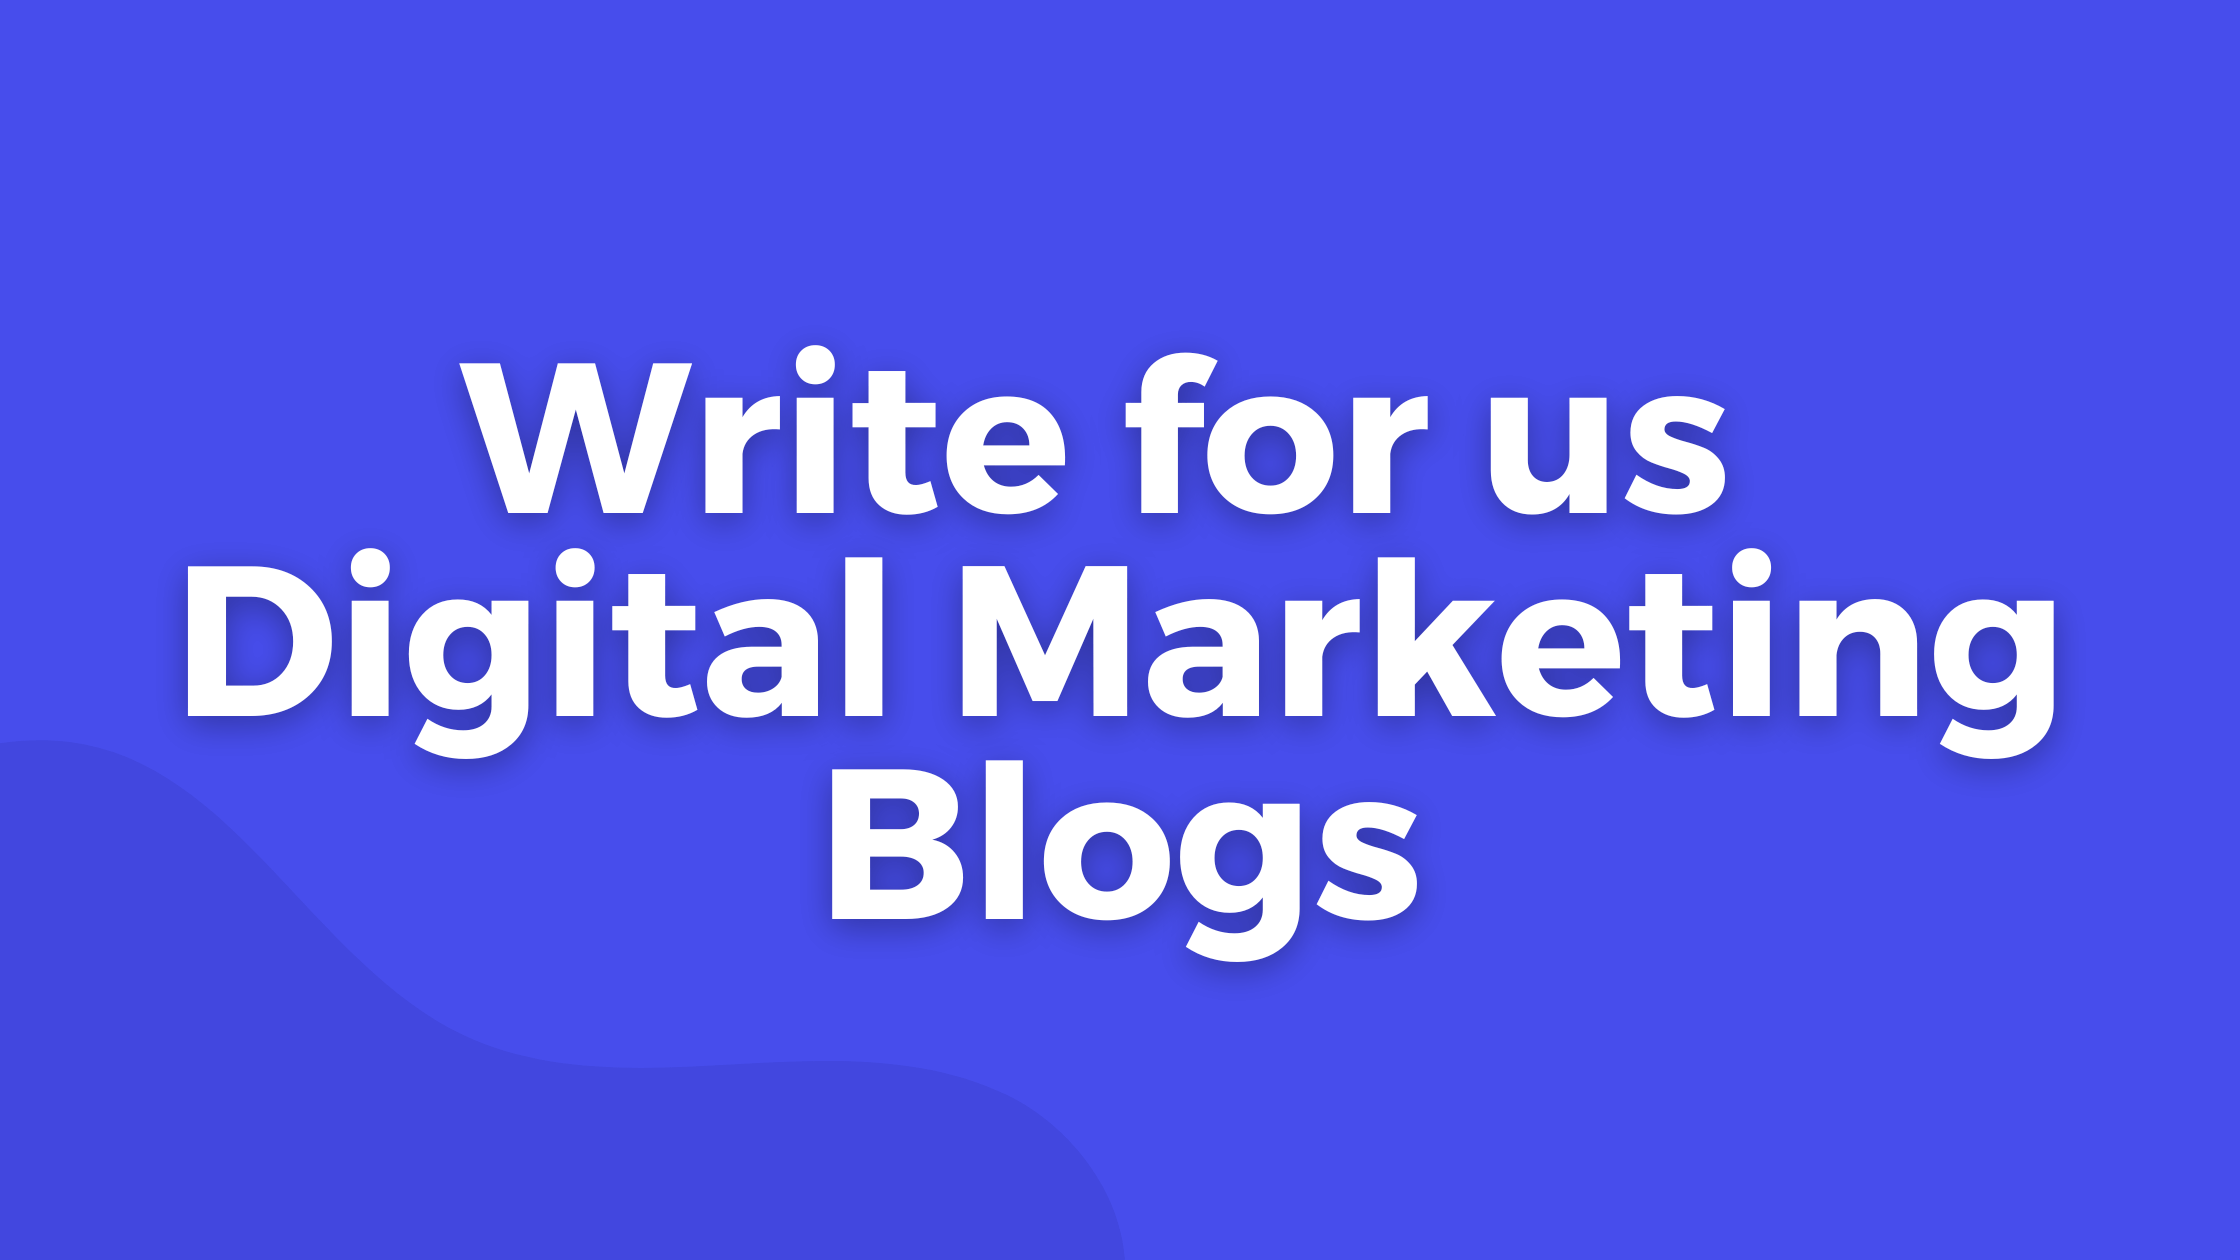 Write for us digital marketing Blogs